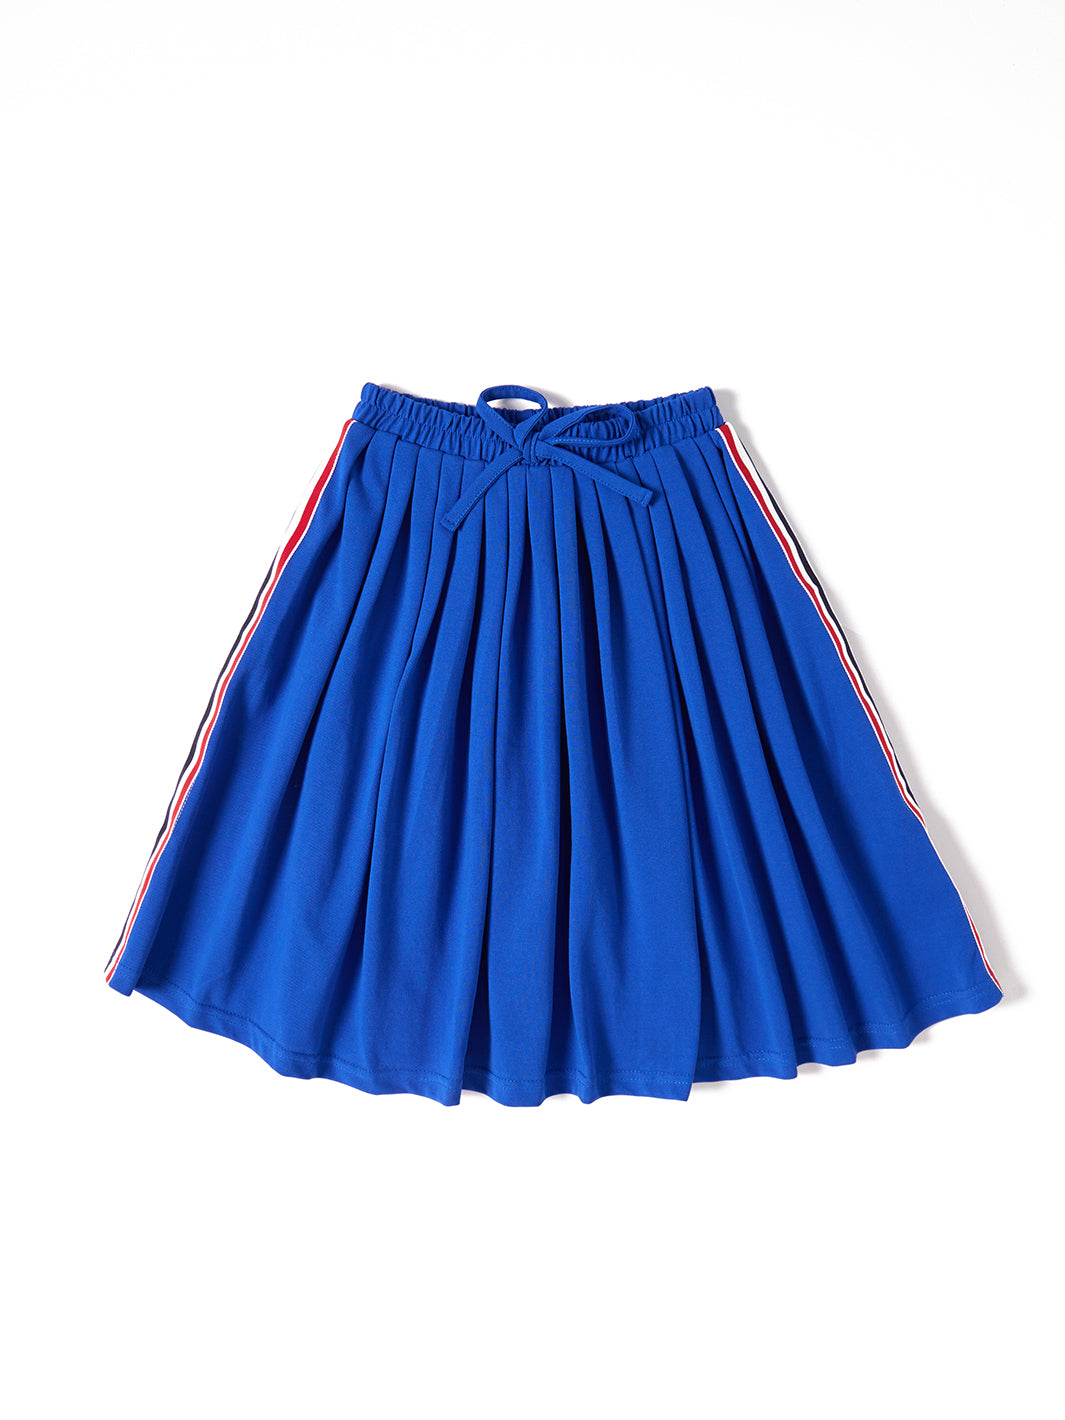 Trim Skirt